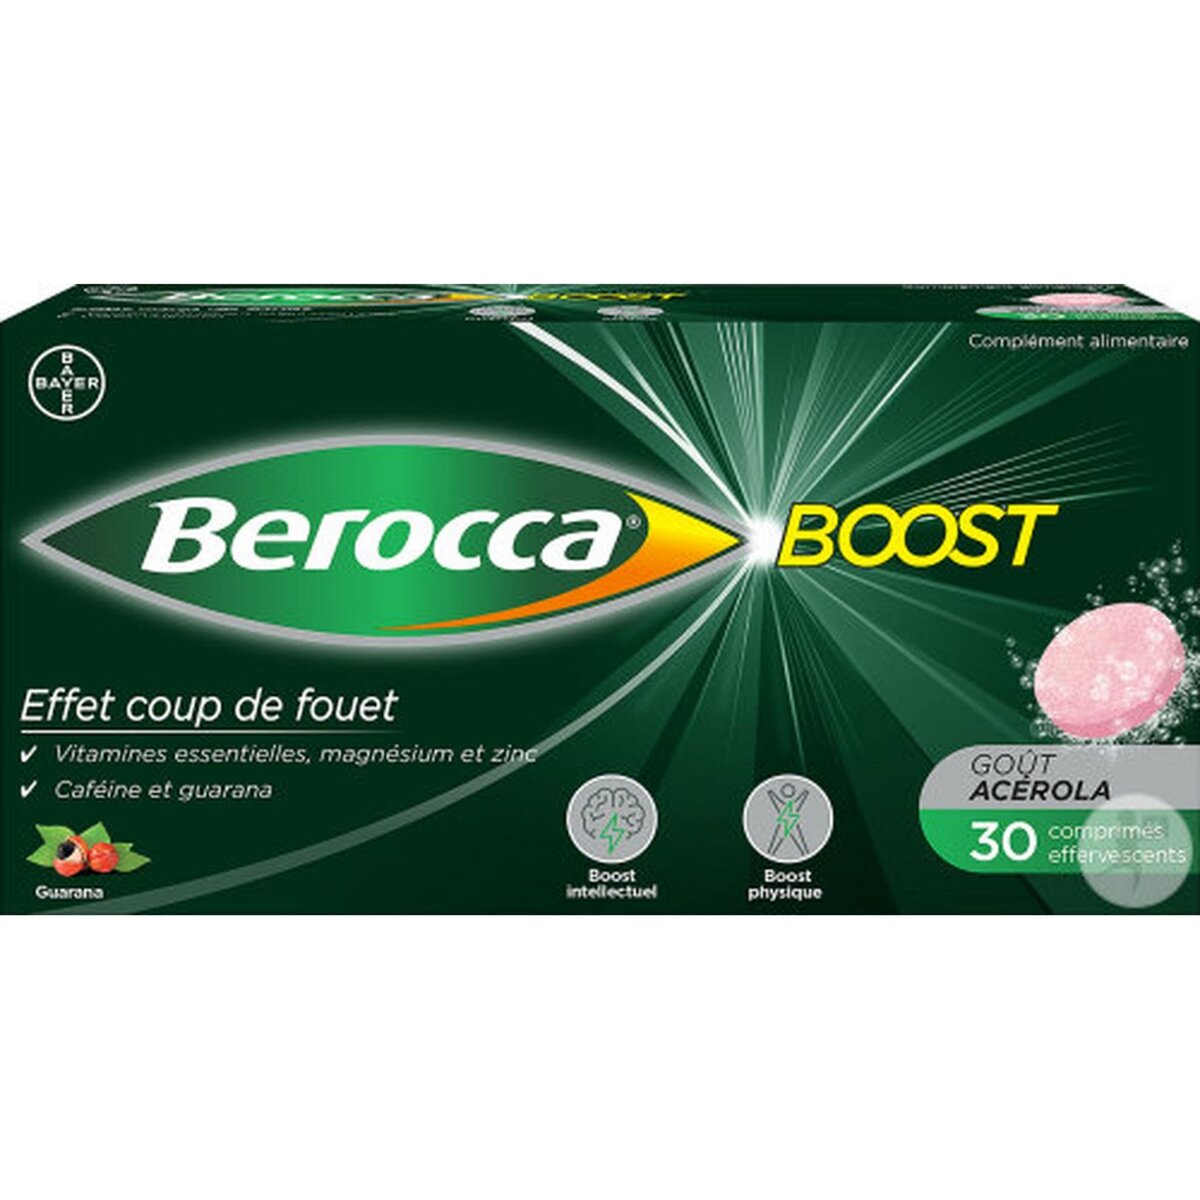 BEROCCA Boost Comprimés effervescents effet coup de fouet goût acérola x30